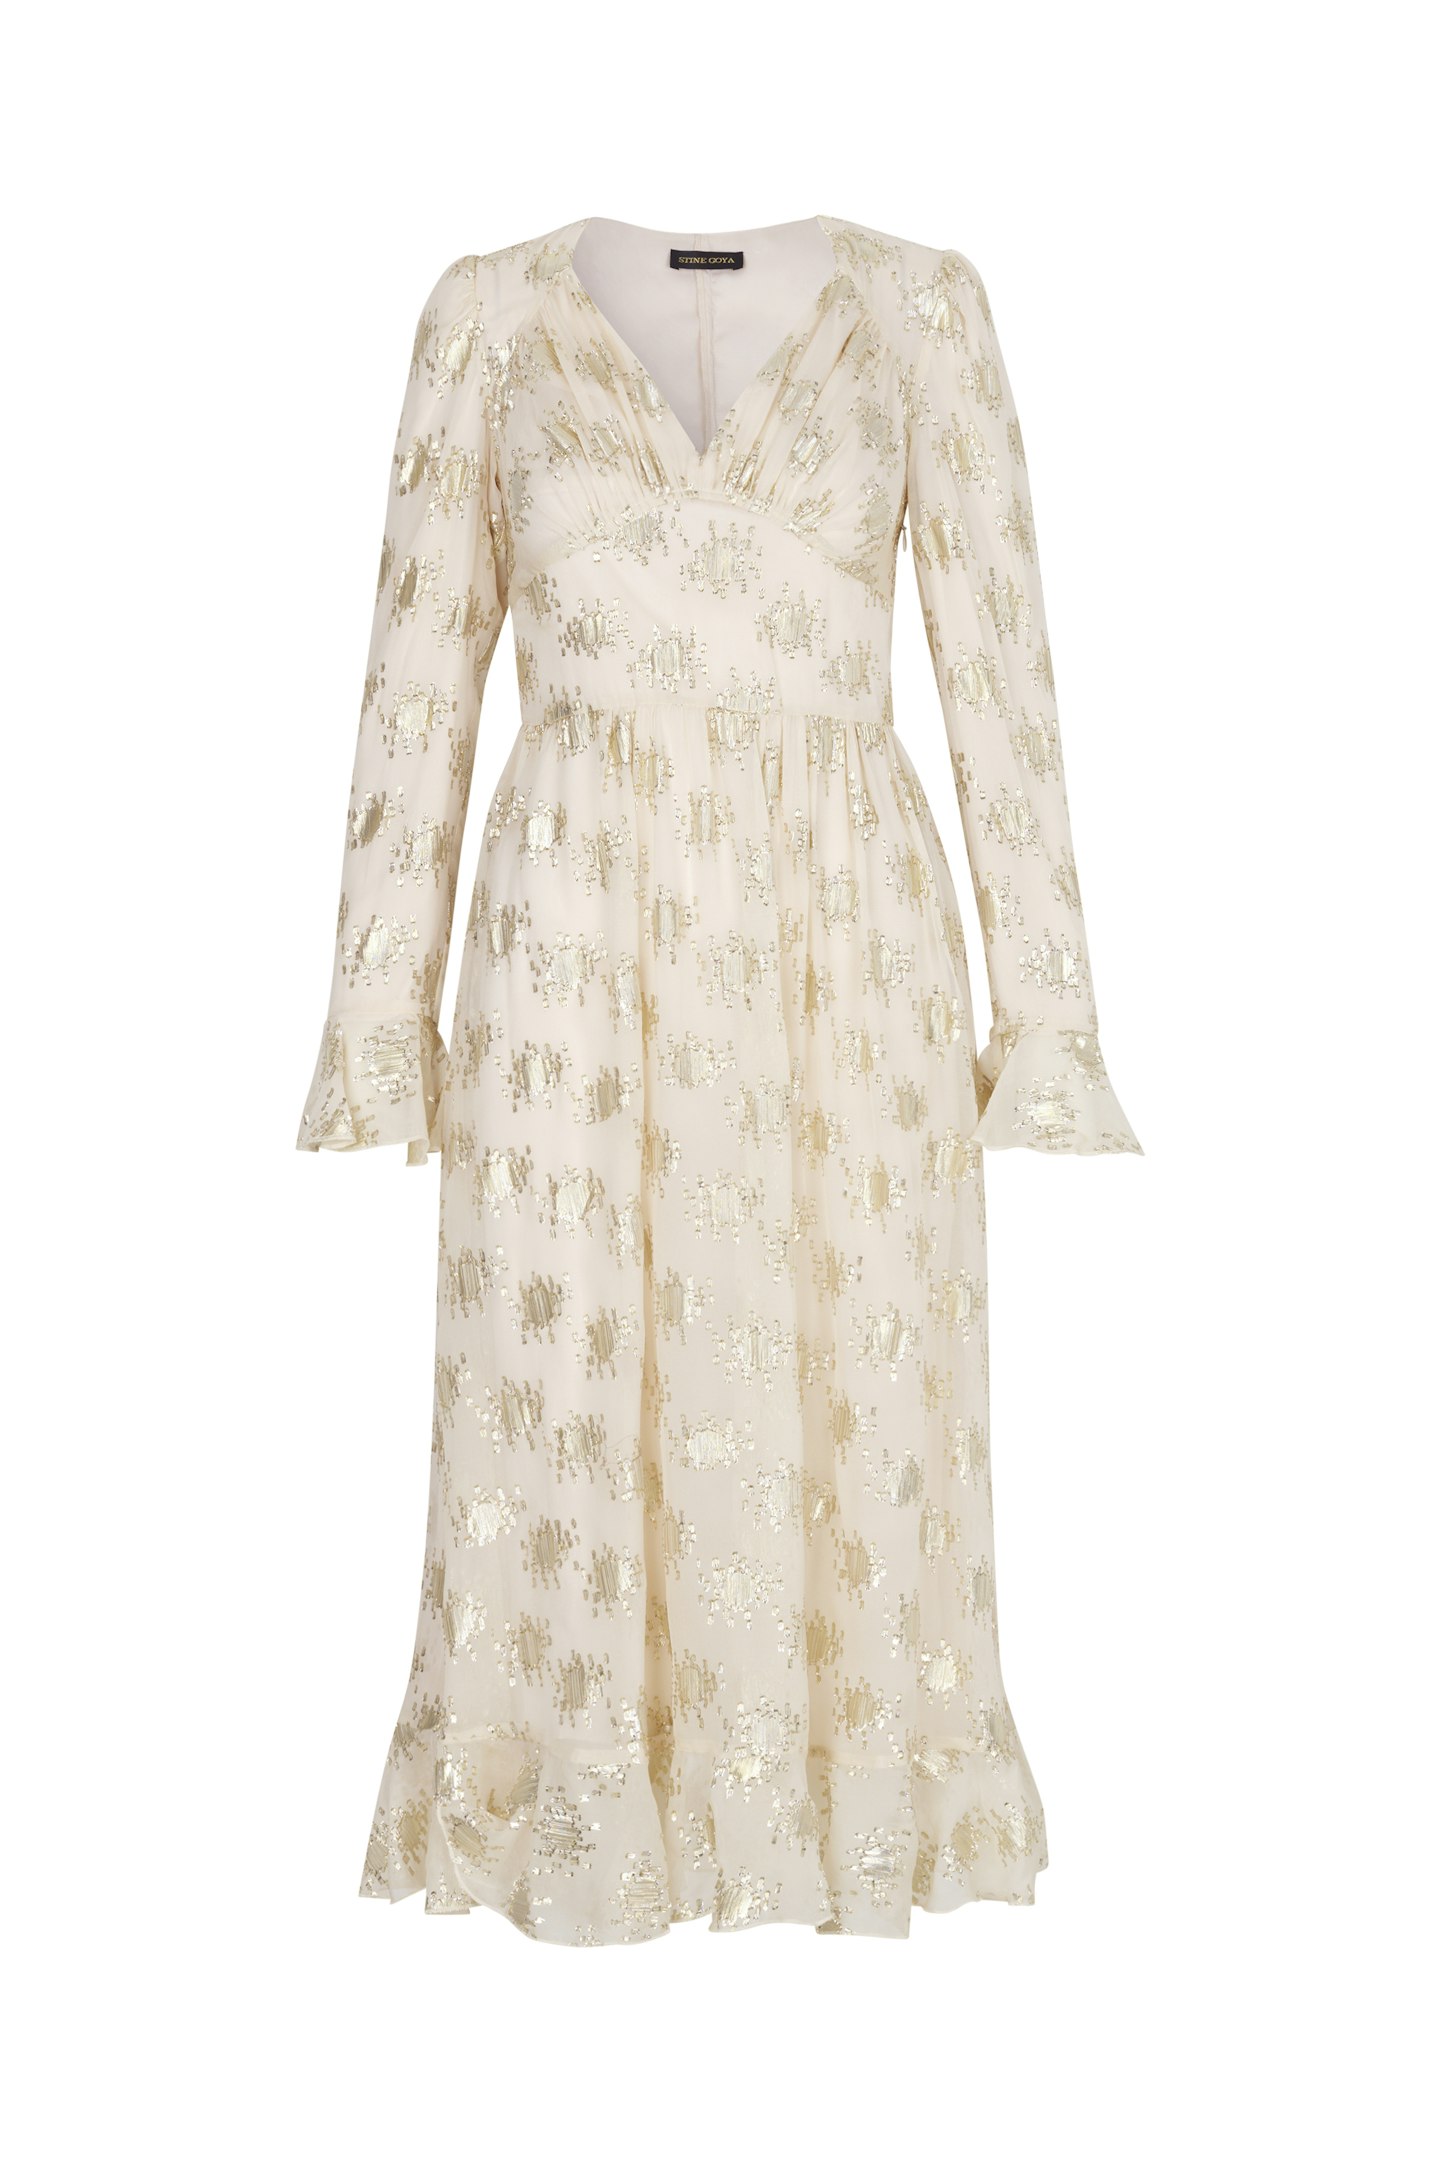 Stine Goya, William Metallic Fil Coupe Silk-Blend Midi Dress, £480, Net-A-Porter